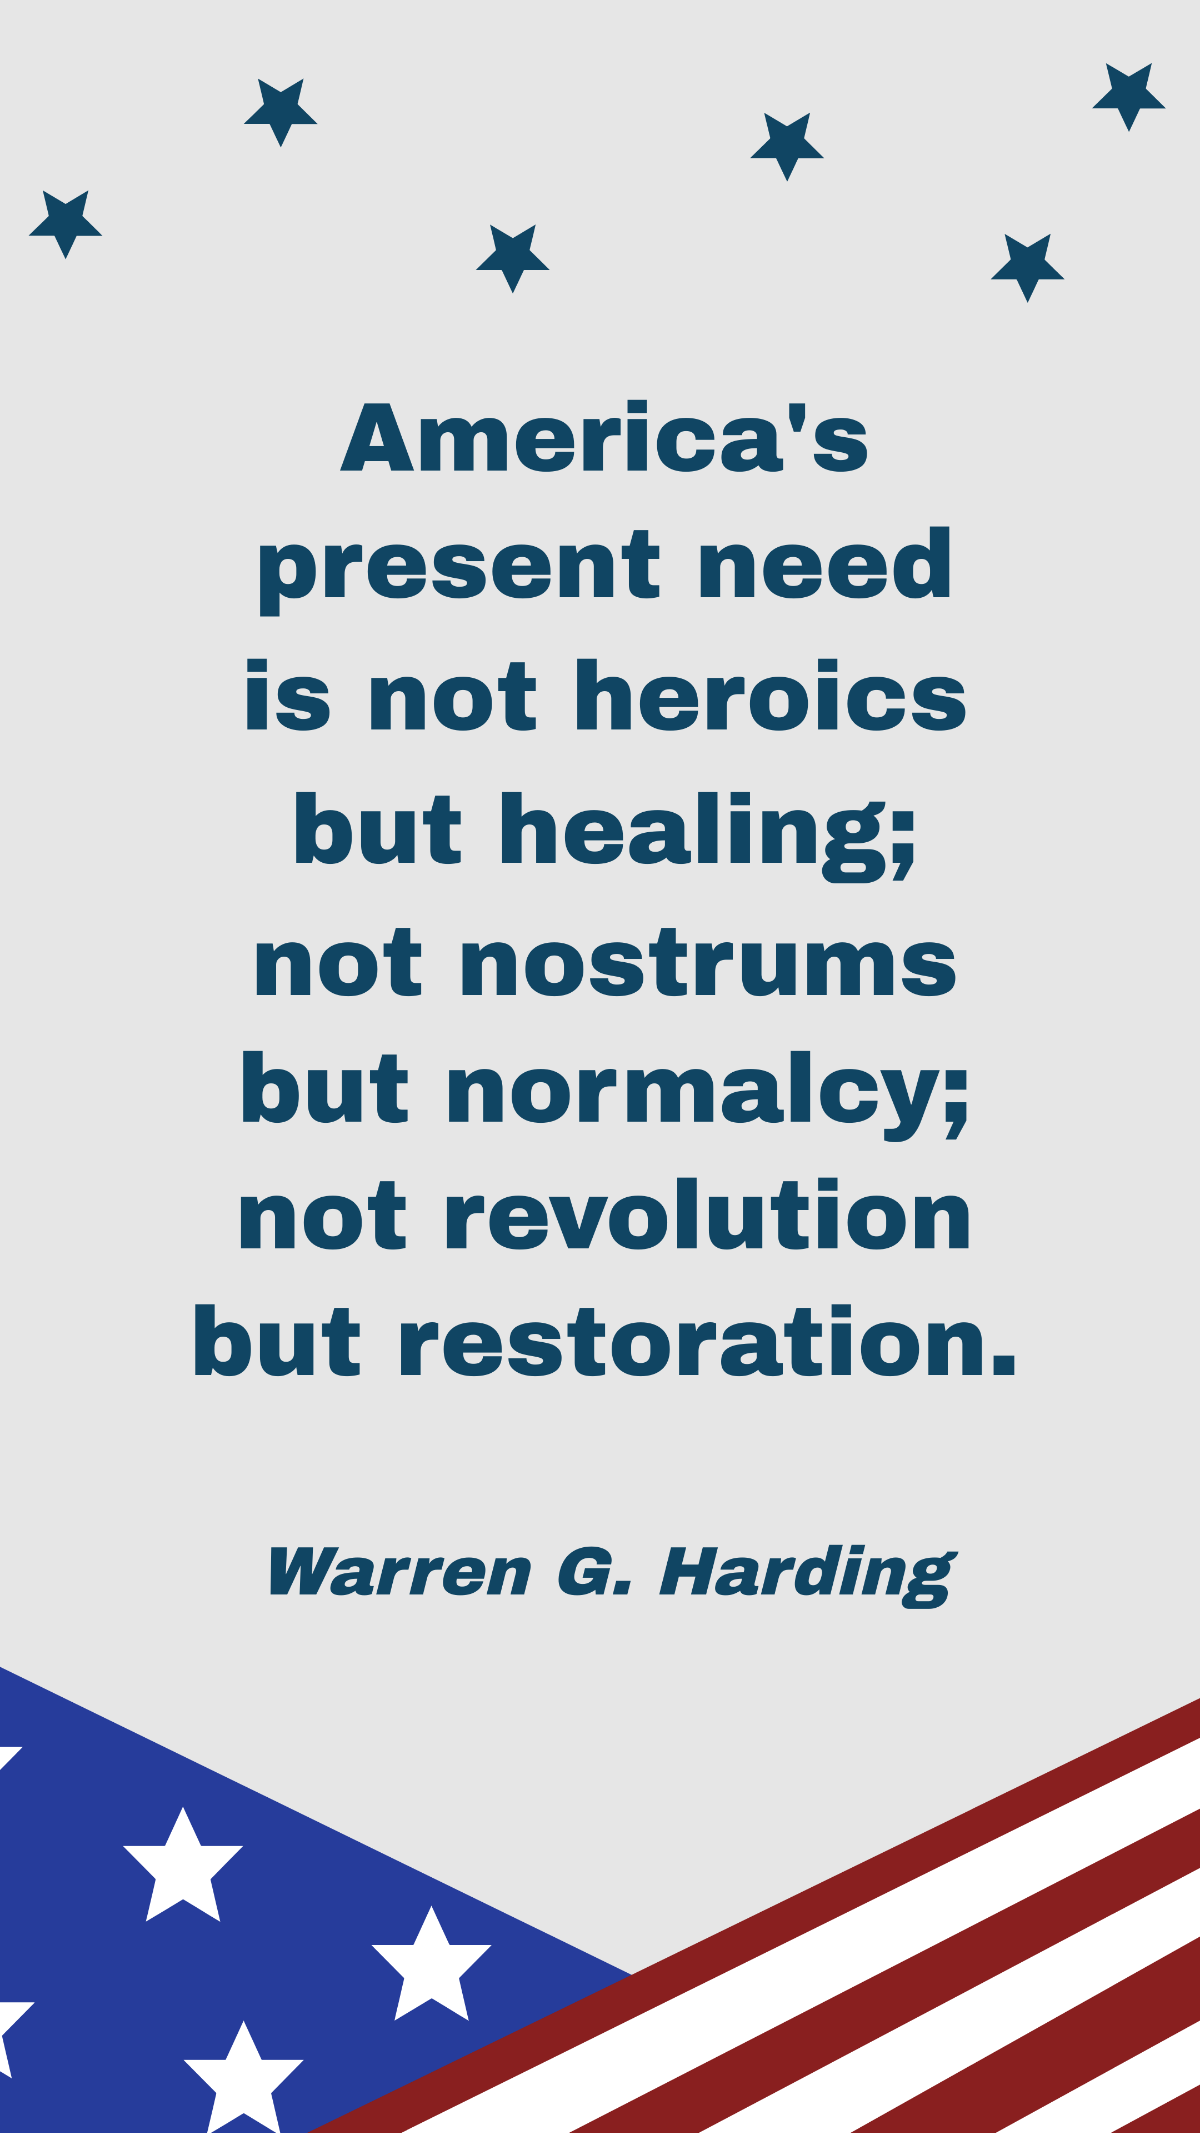 Free Warren G. Harding - America's present need is not heroics but healing; not nostrums but normalcy; not revolution but restoration. Template